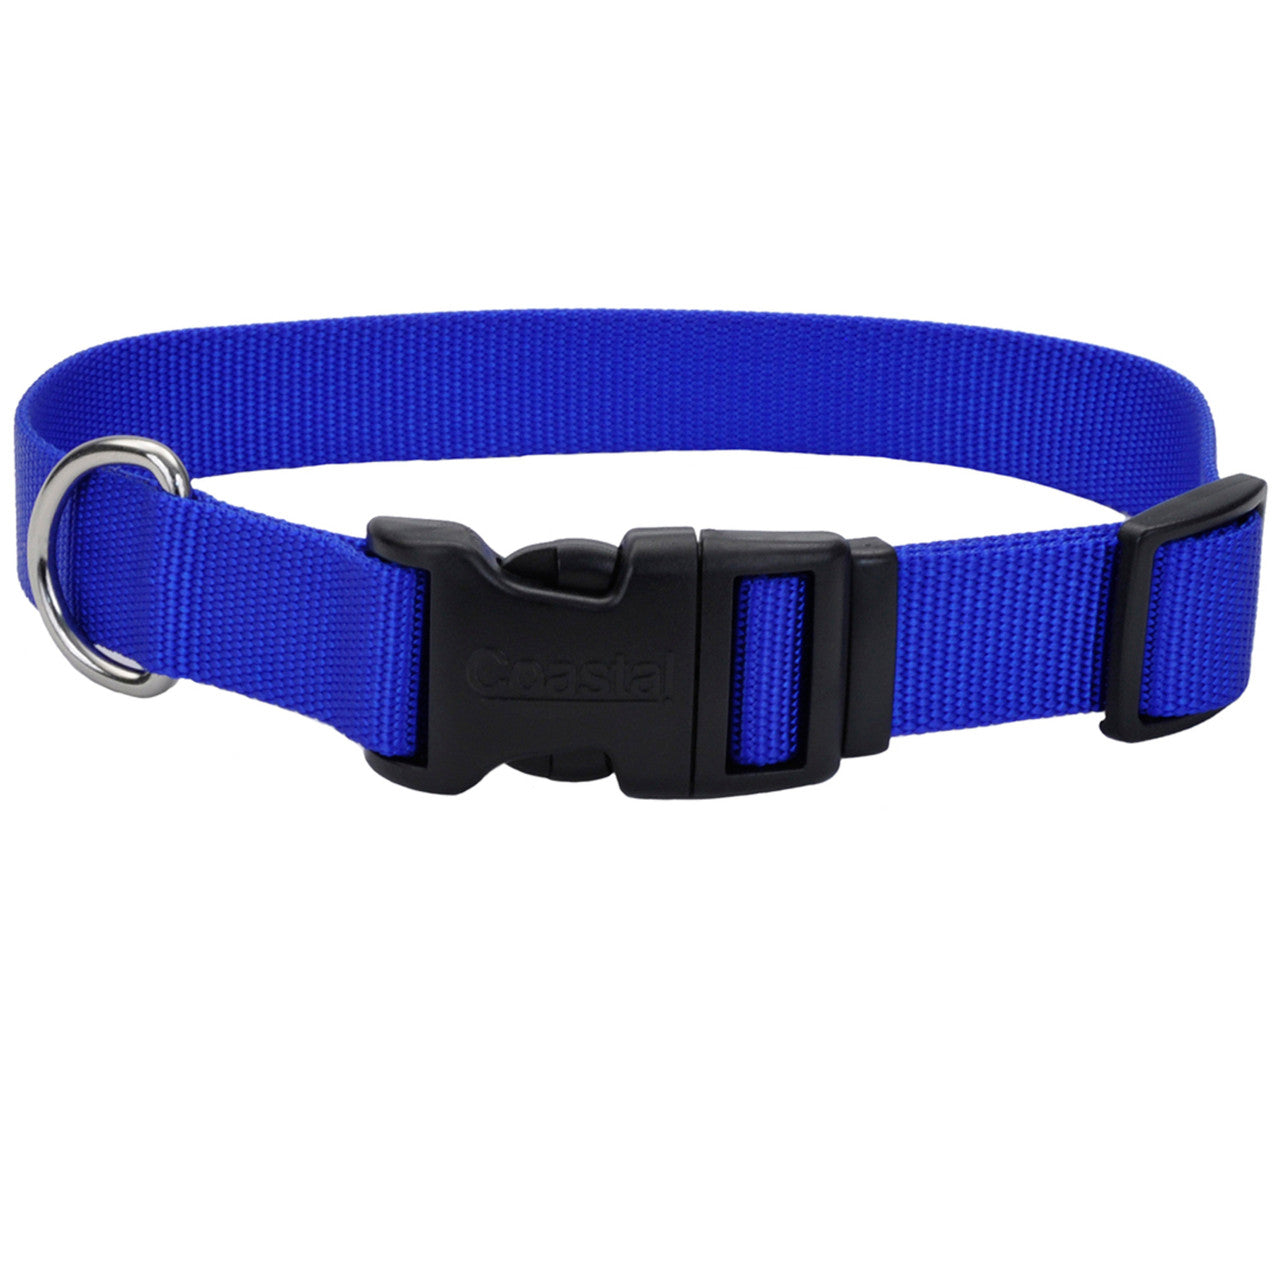 Coastal Adjustable Nylon Dog Collar with Plastic Buckle Blue 3/4 in x 14-20 in